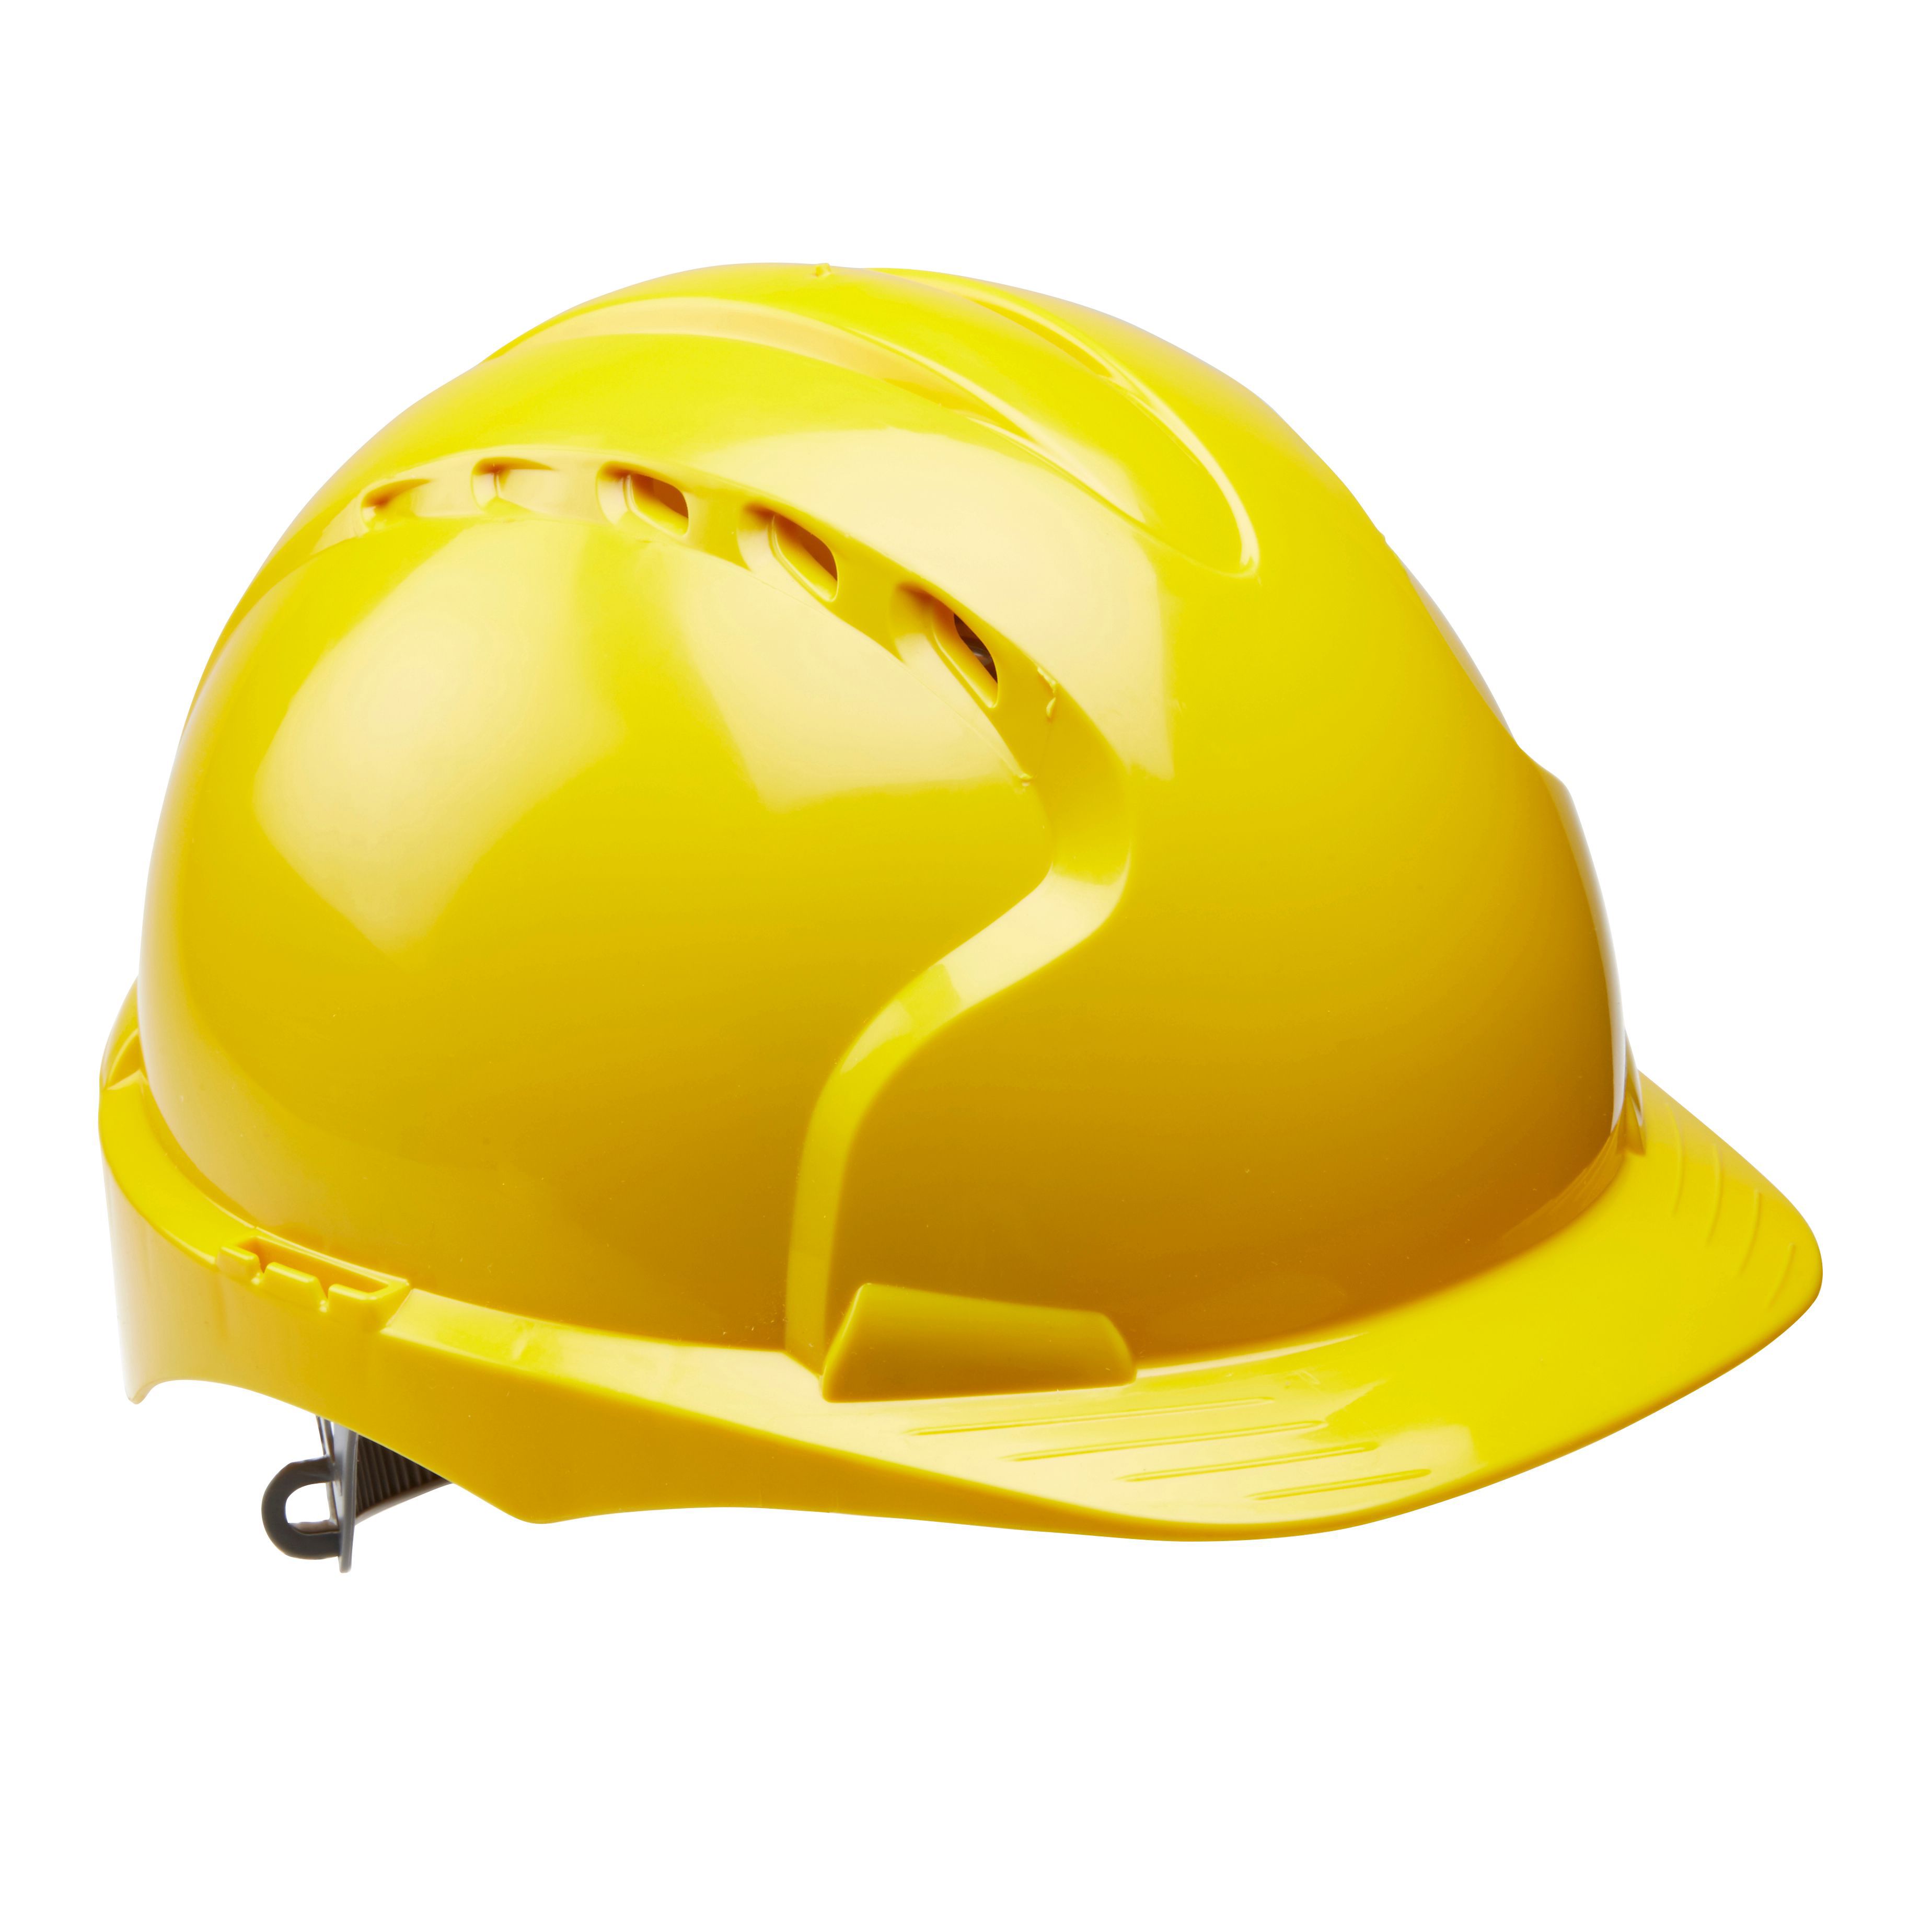 Site Yellow Hard hat